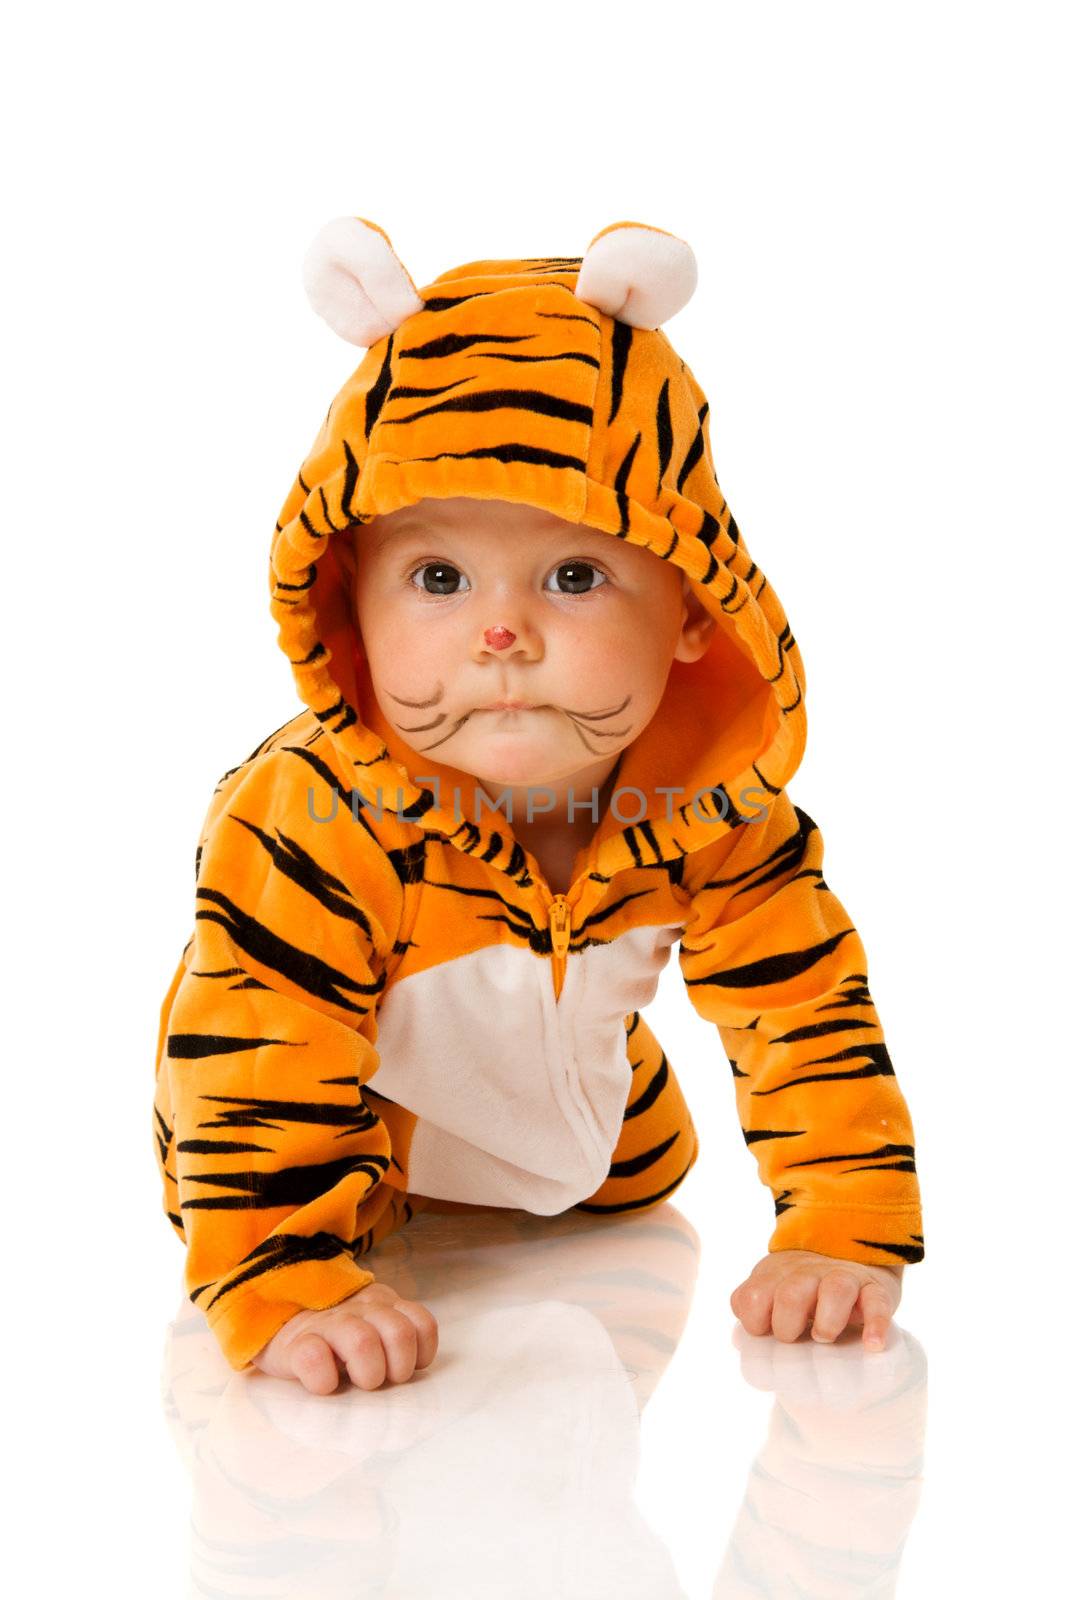 Tiger baby by olga_sweet